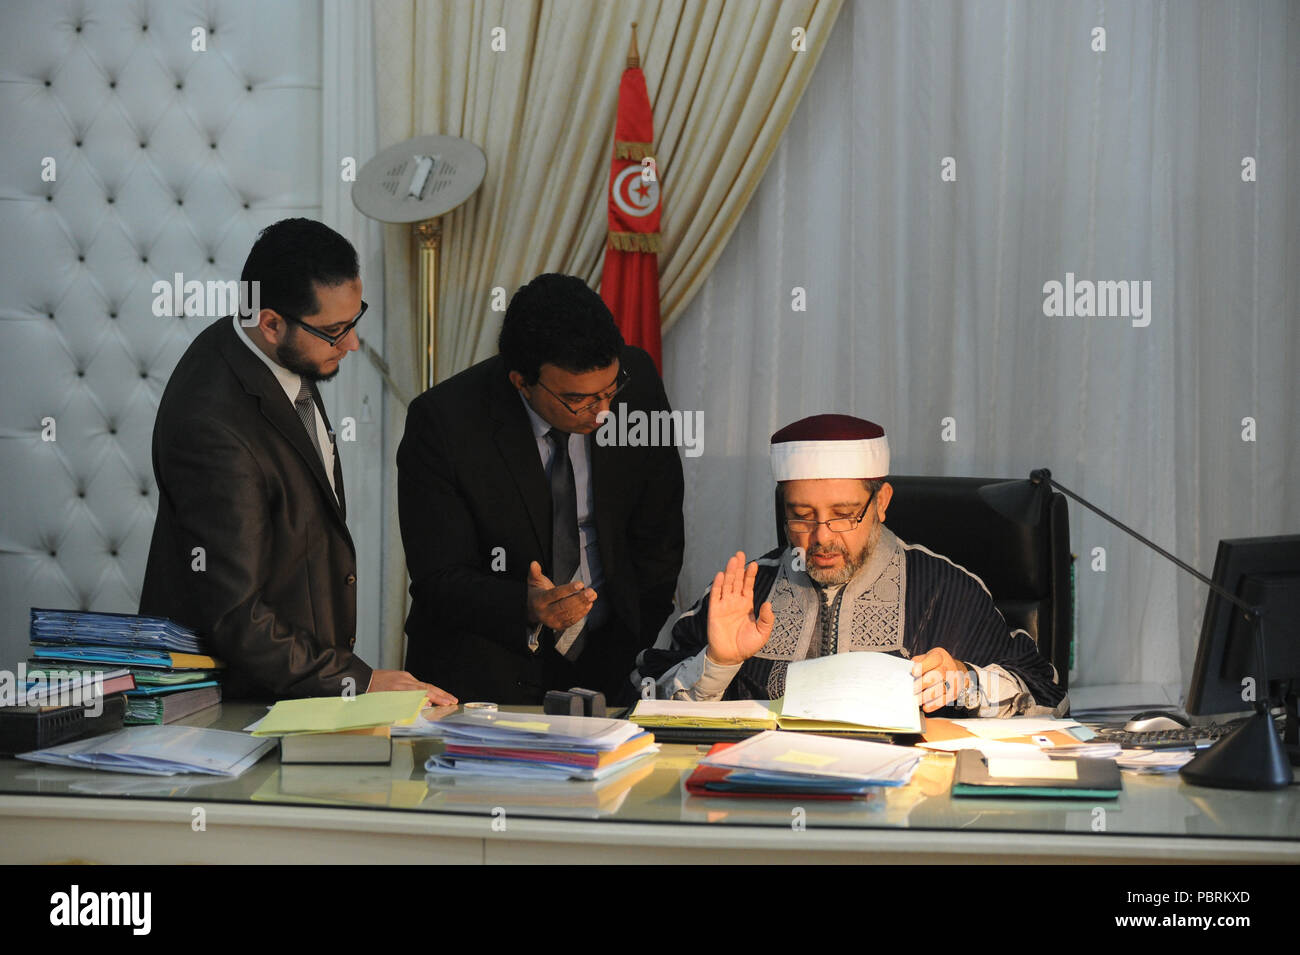 February 15, 2013 - Tunis, Tunisia: Portrait of Noureddine El Khademi,  Tunisia's Minister for Religious Affairs at his office. Portrait du  ministre tunisien des Affaires religieuses, Noureddine El Khademi. ***  FRANCE OUT /